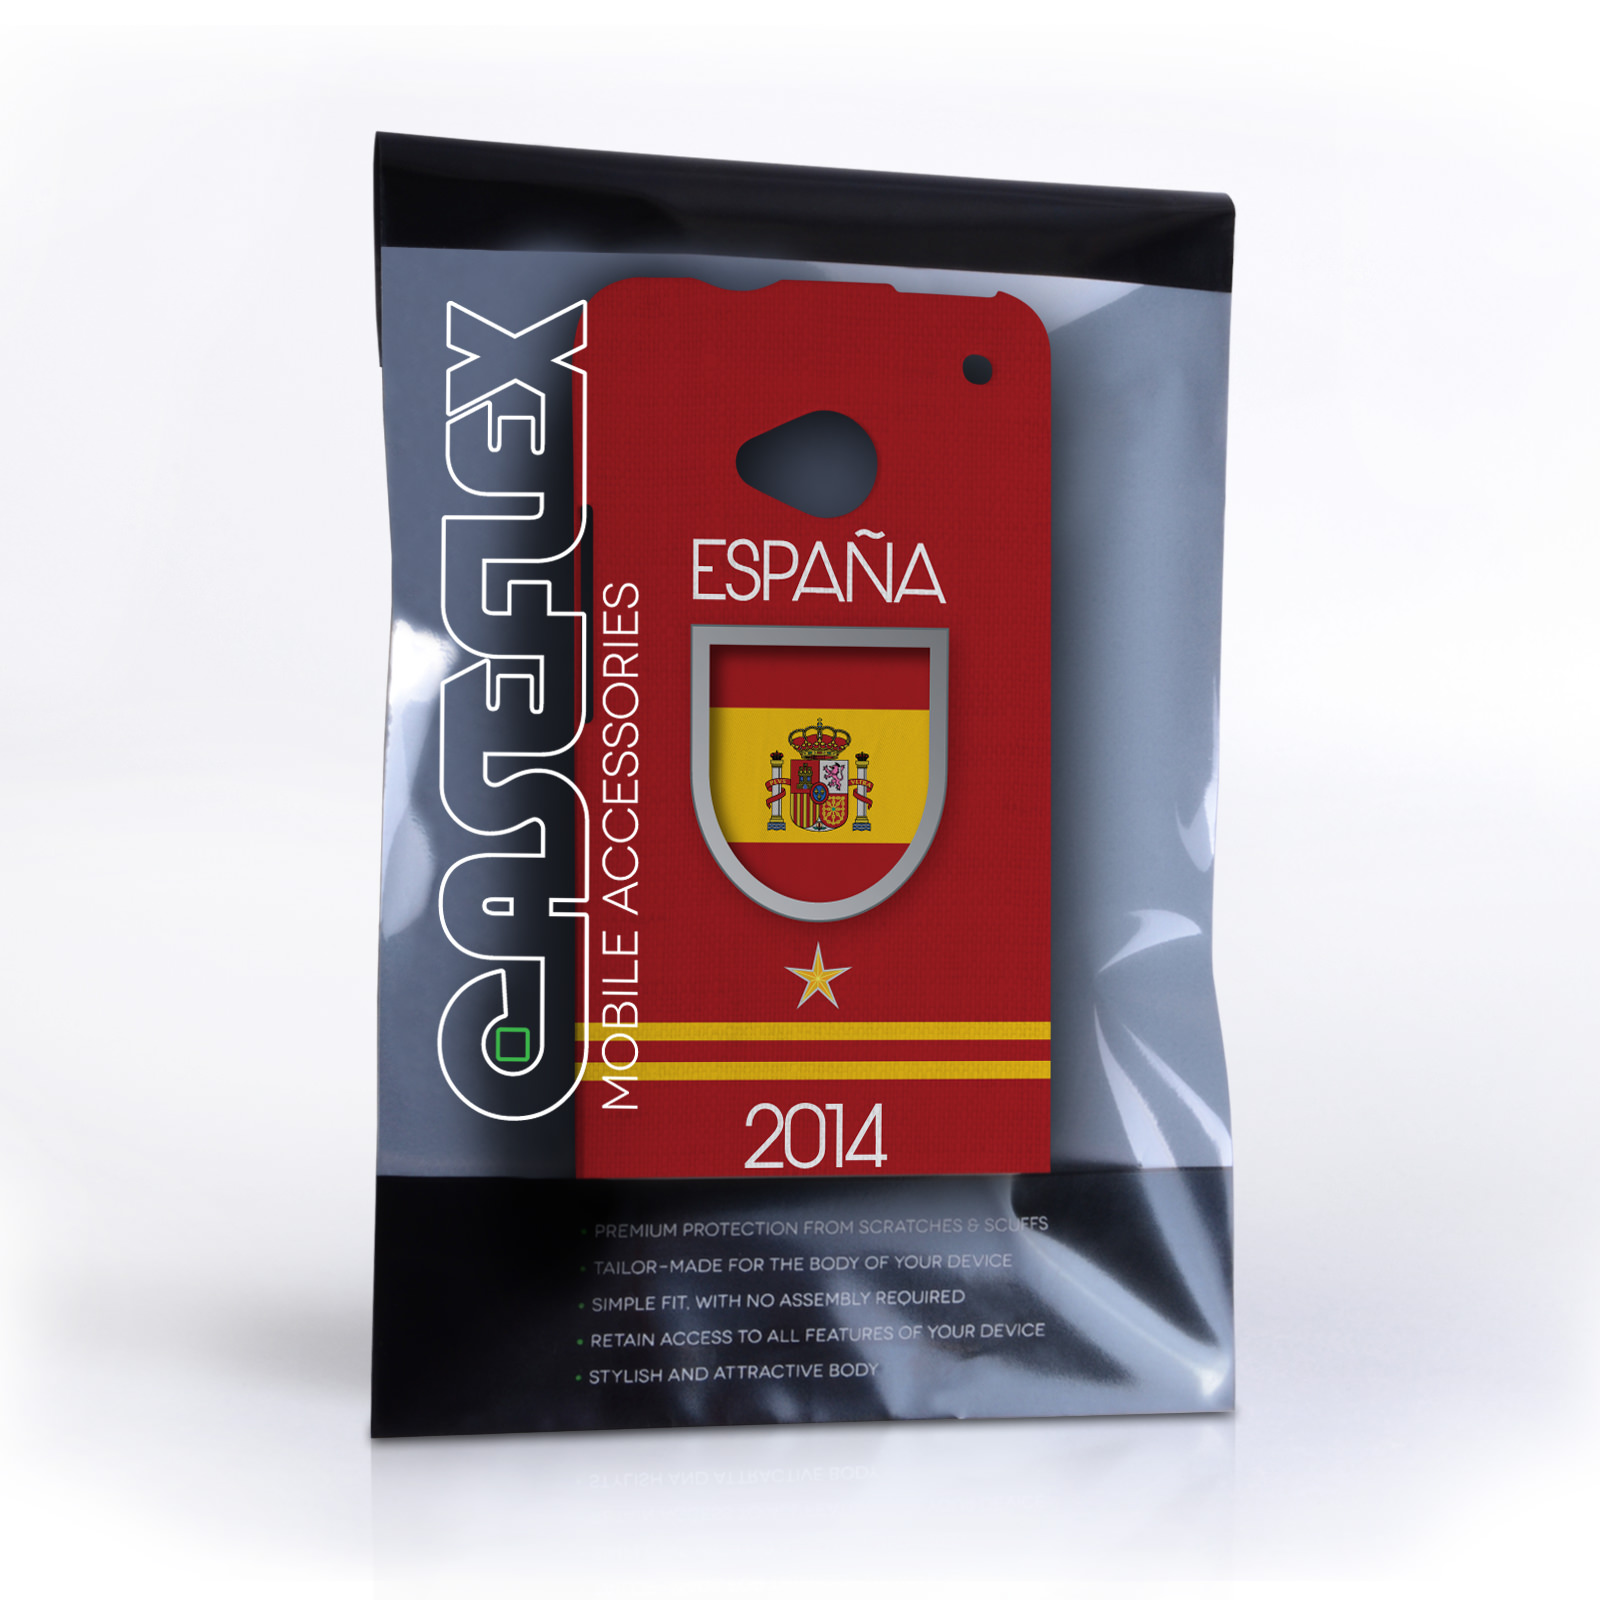 Caseflex HTC One Espana World Cup Case